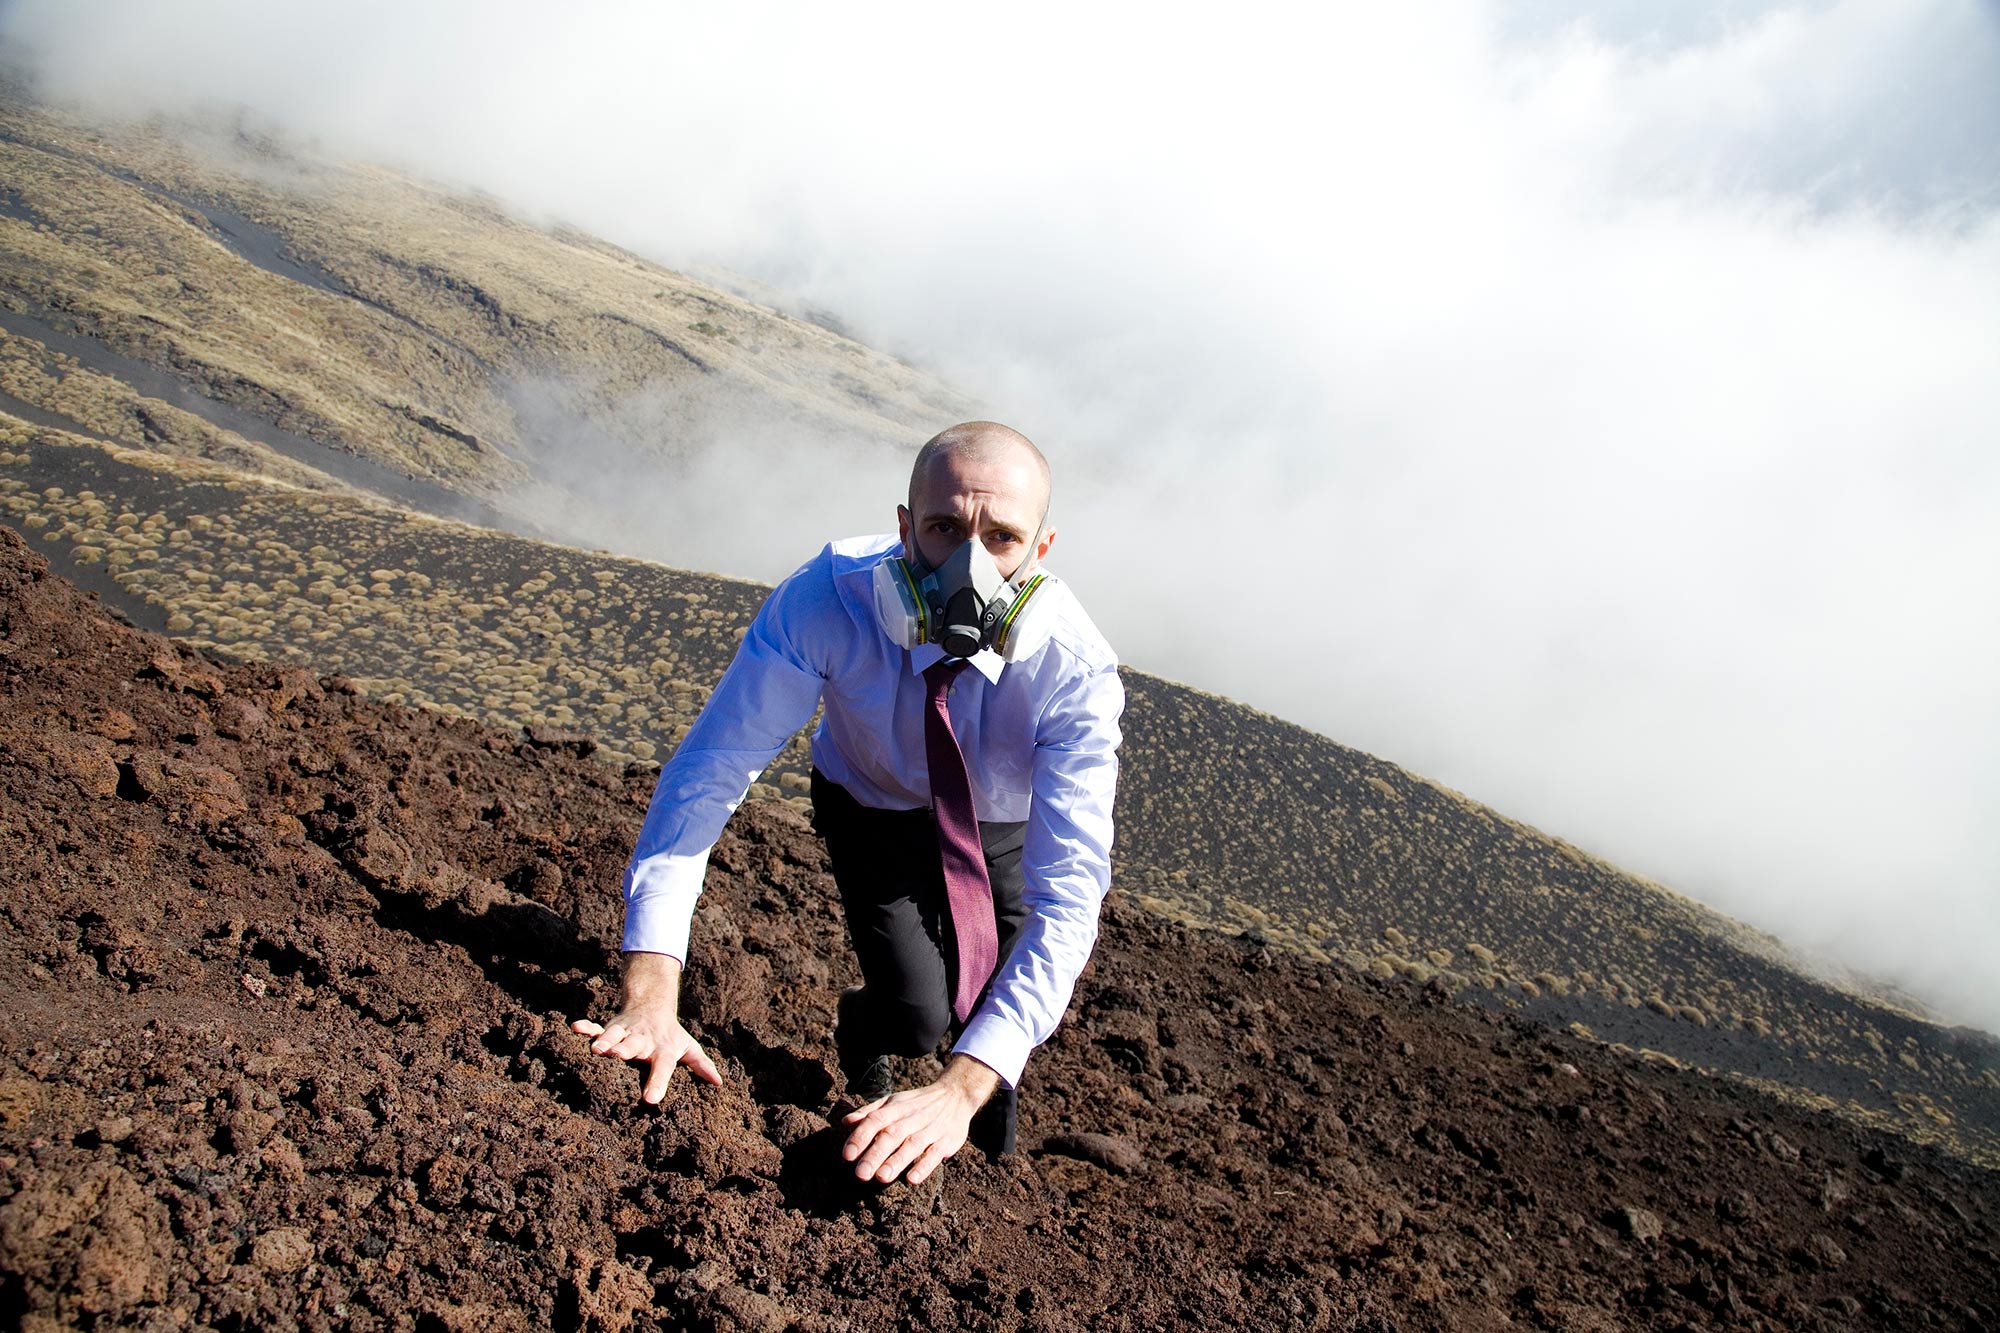 Matthias Mollner in a business dress and a gas mask climbs the hillside of a vulcano